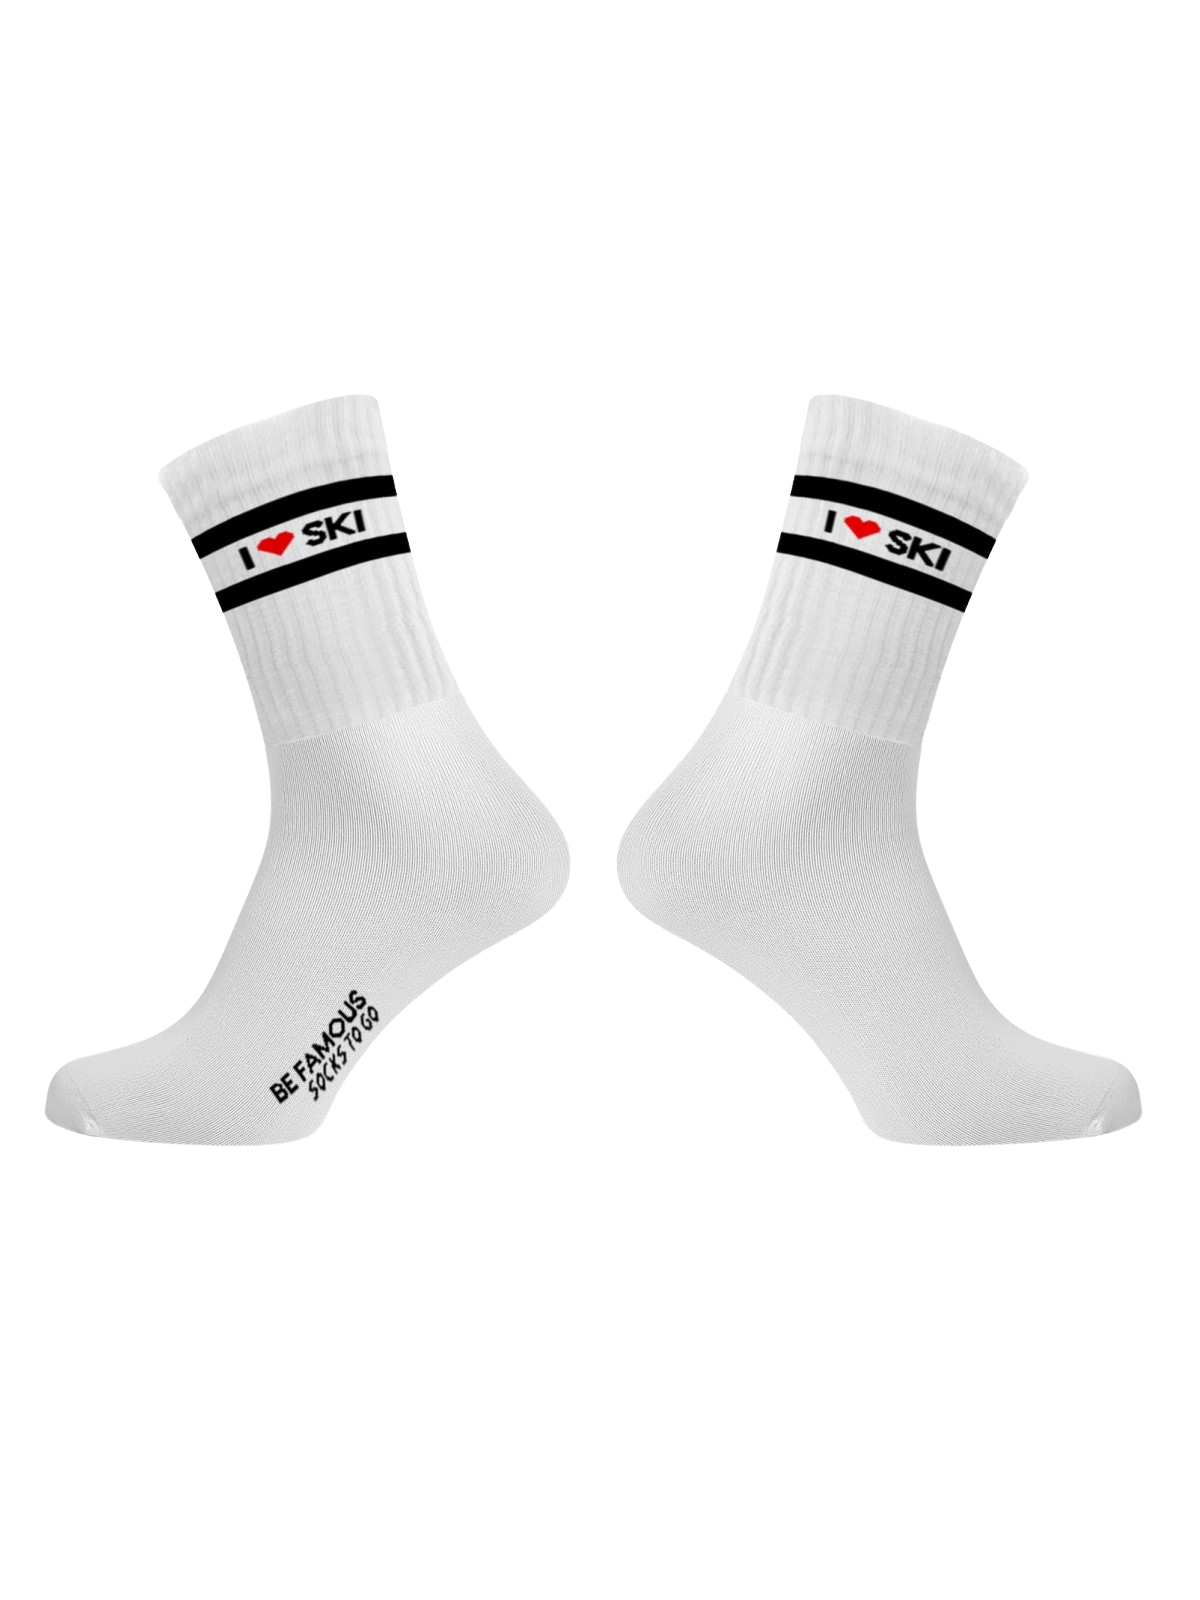 Be Famous  Socks to go  Statement  Socken  I ♥ SKI BFSO-34 white socks / black stripe / black-red ♥ statement 36-41